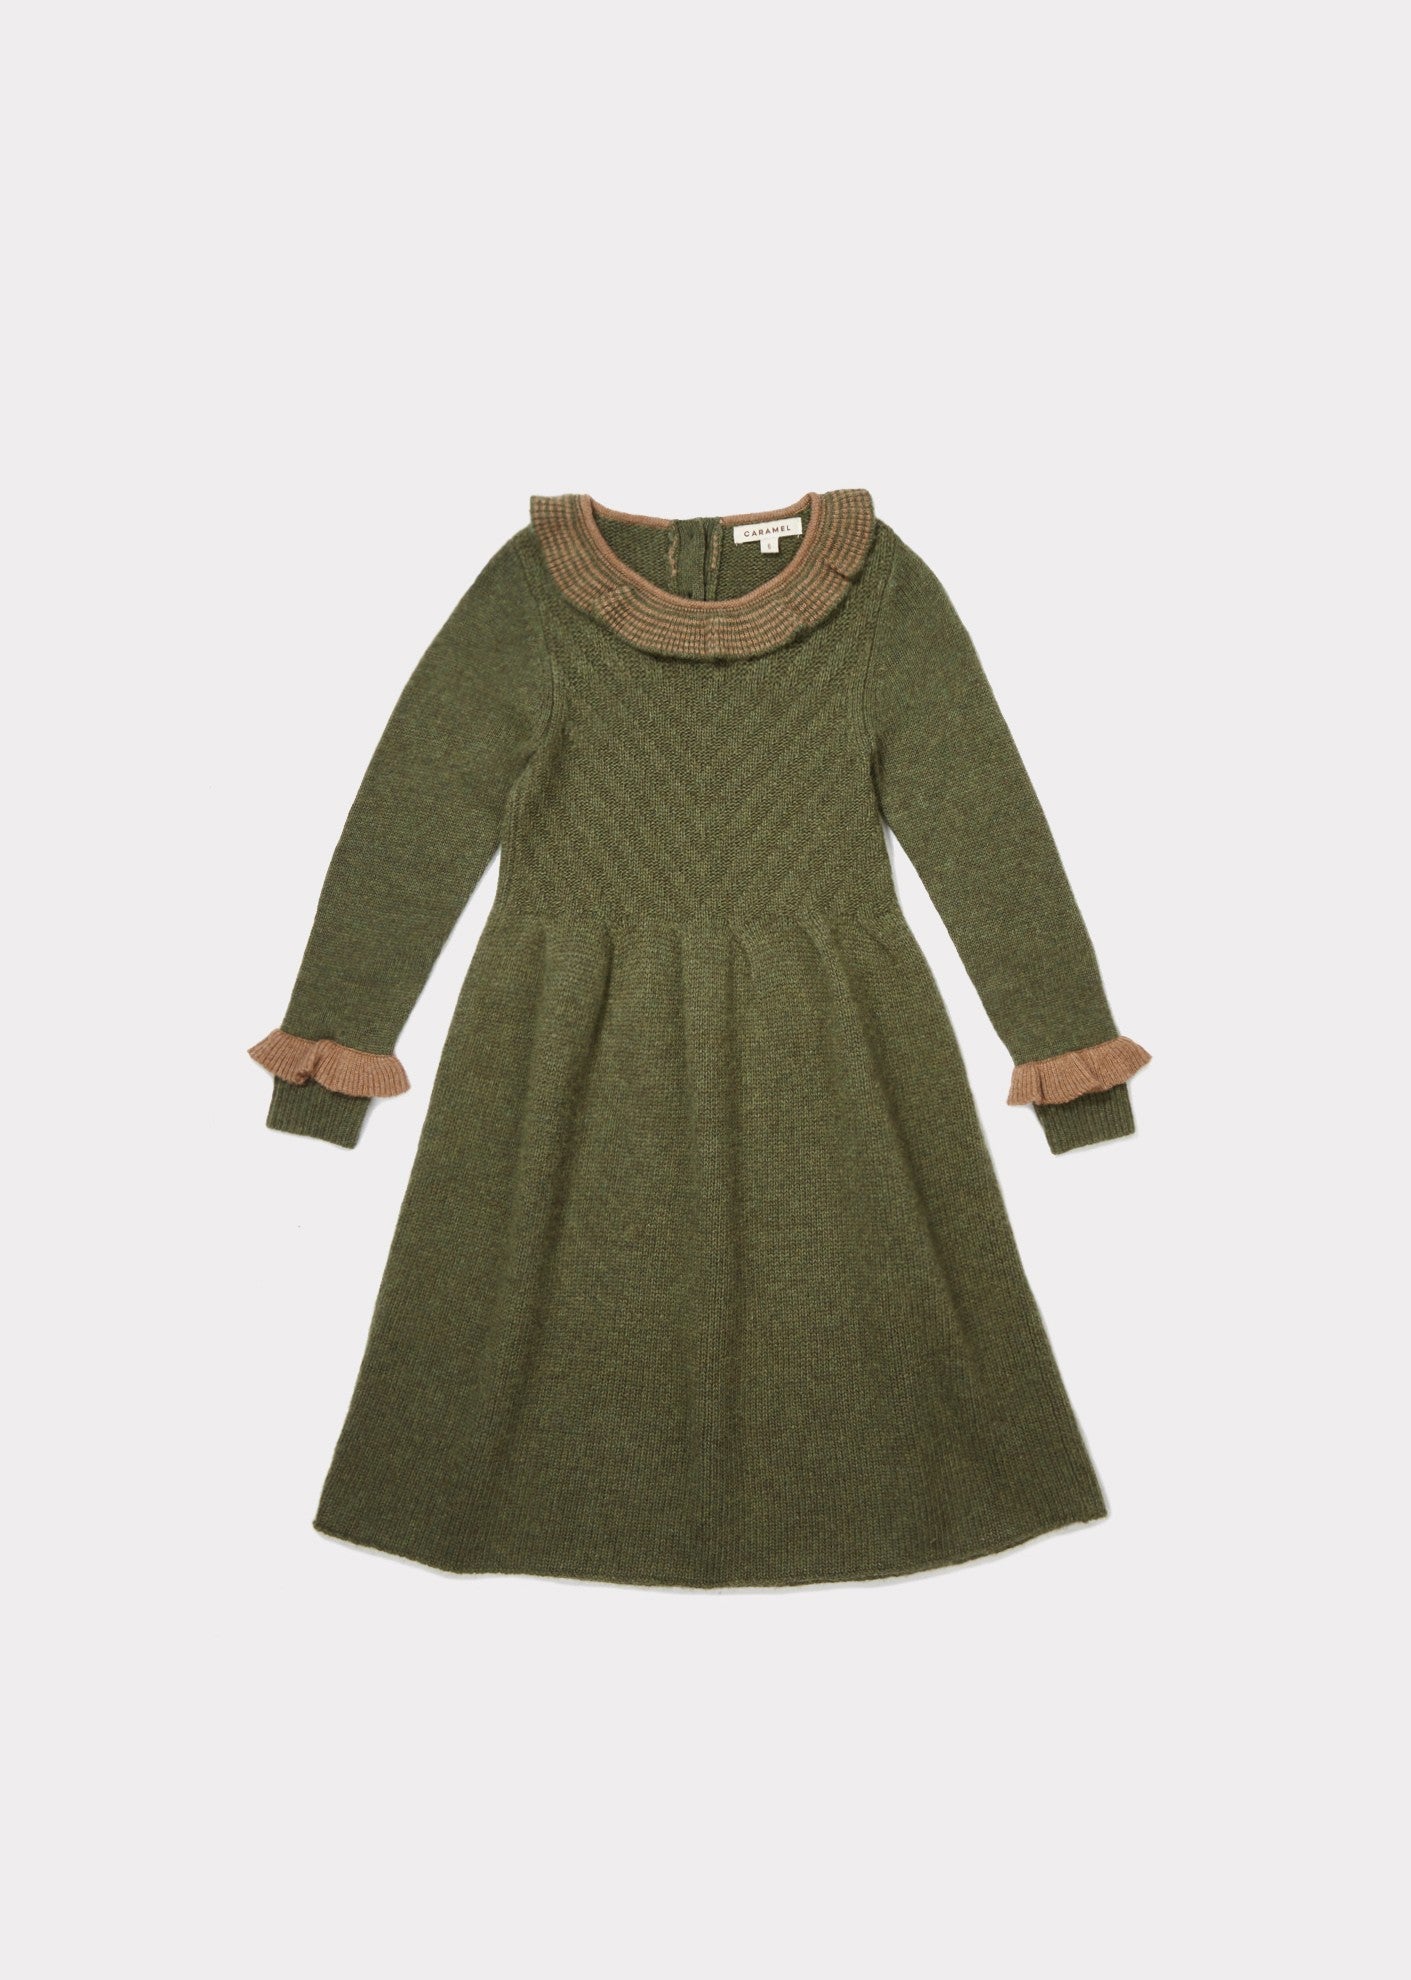 Girls Dark Green Knitted Dress